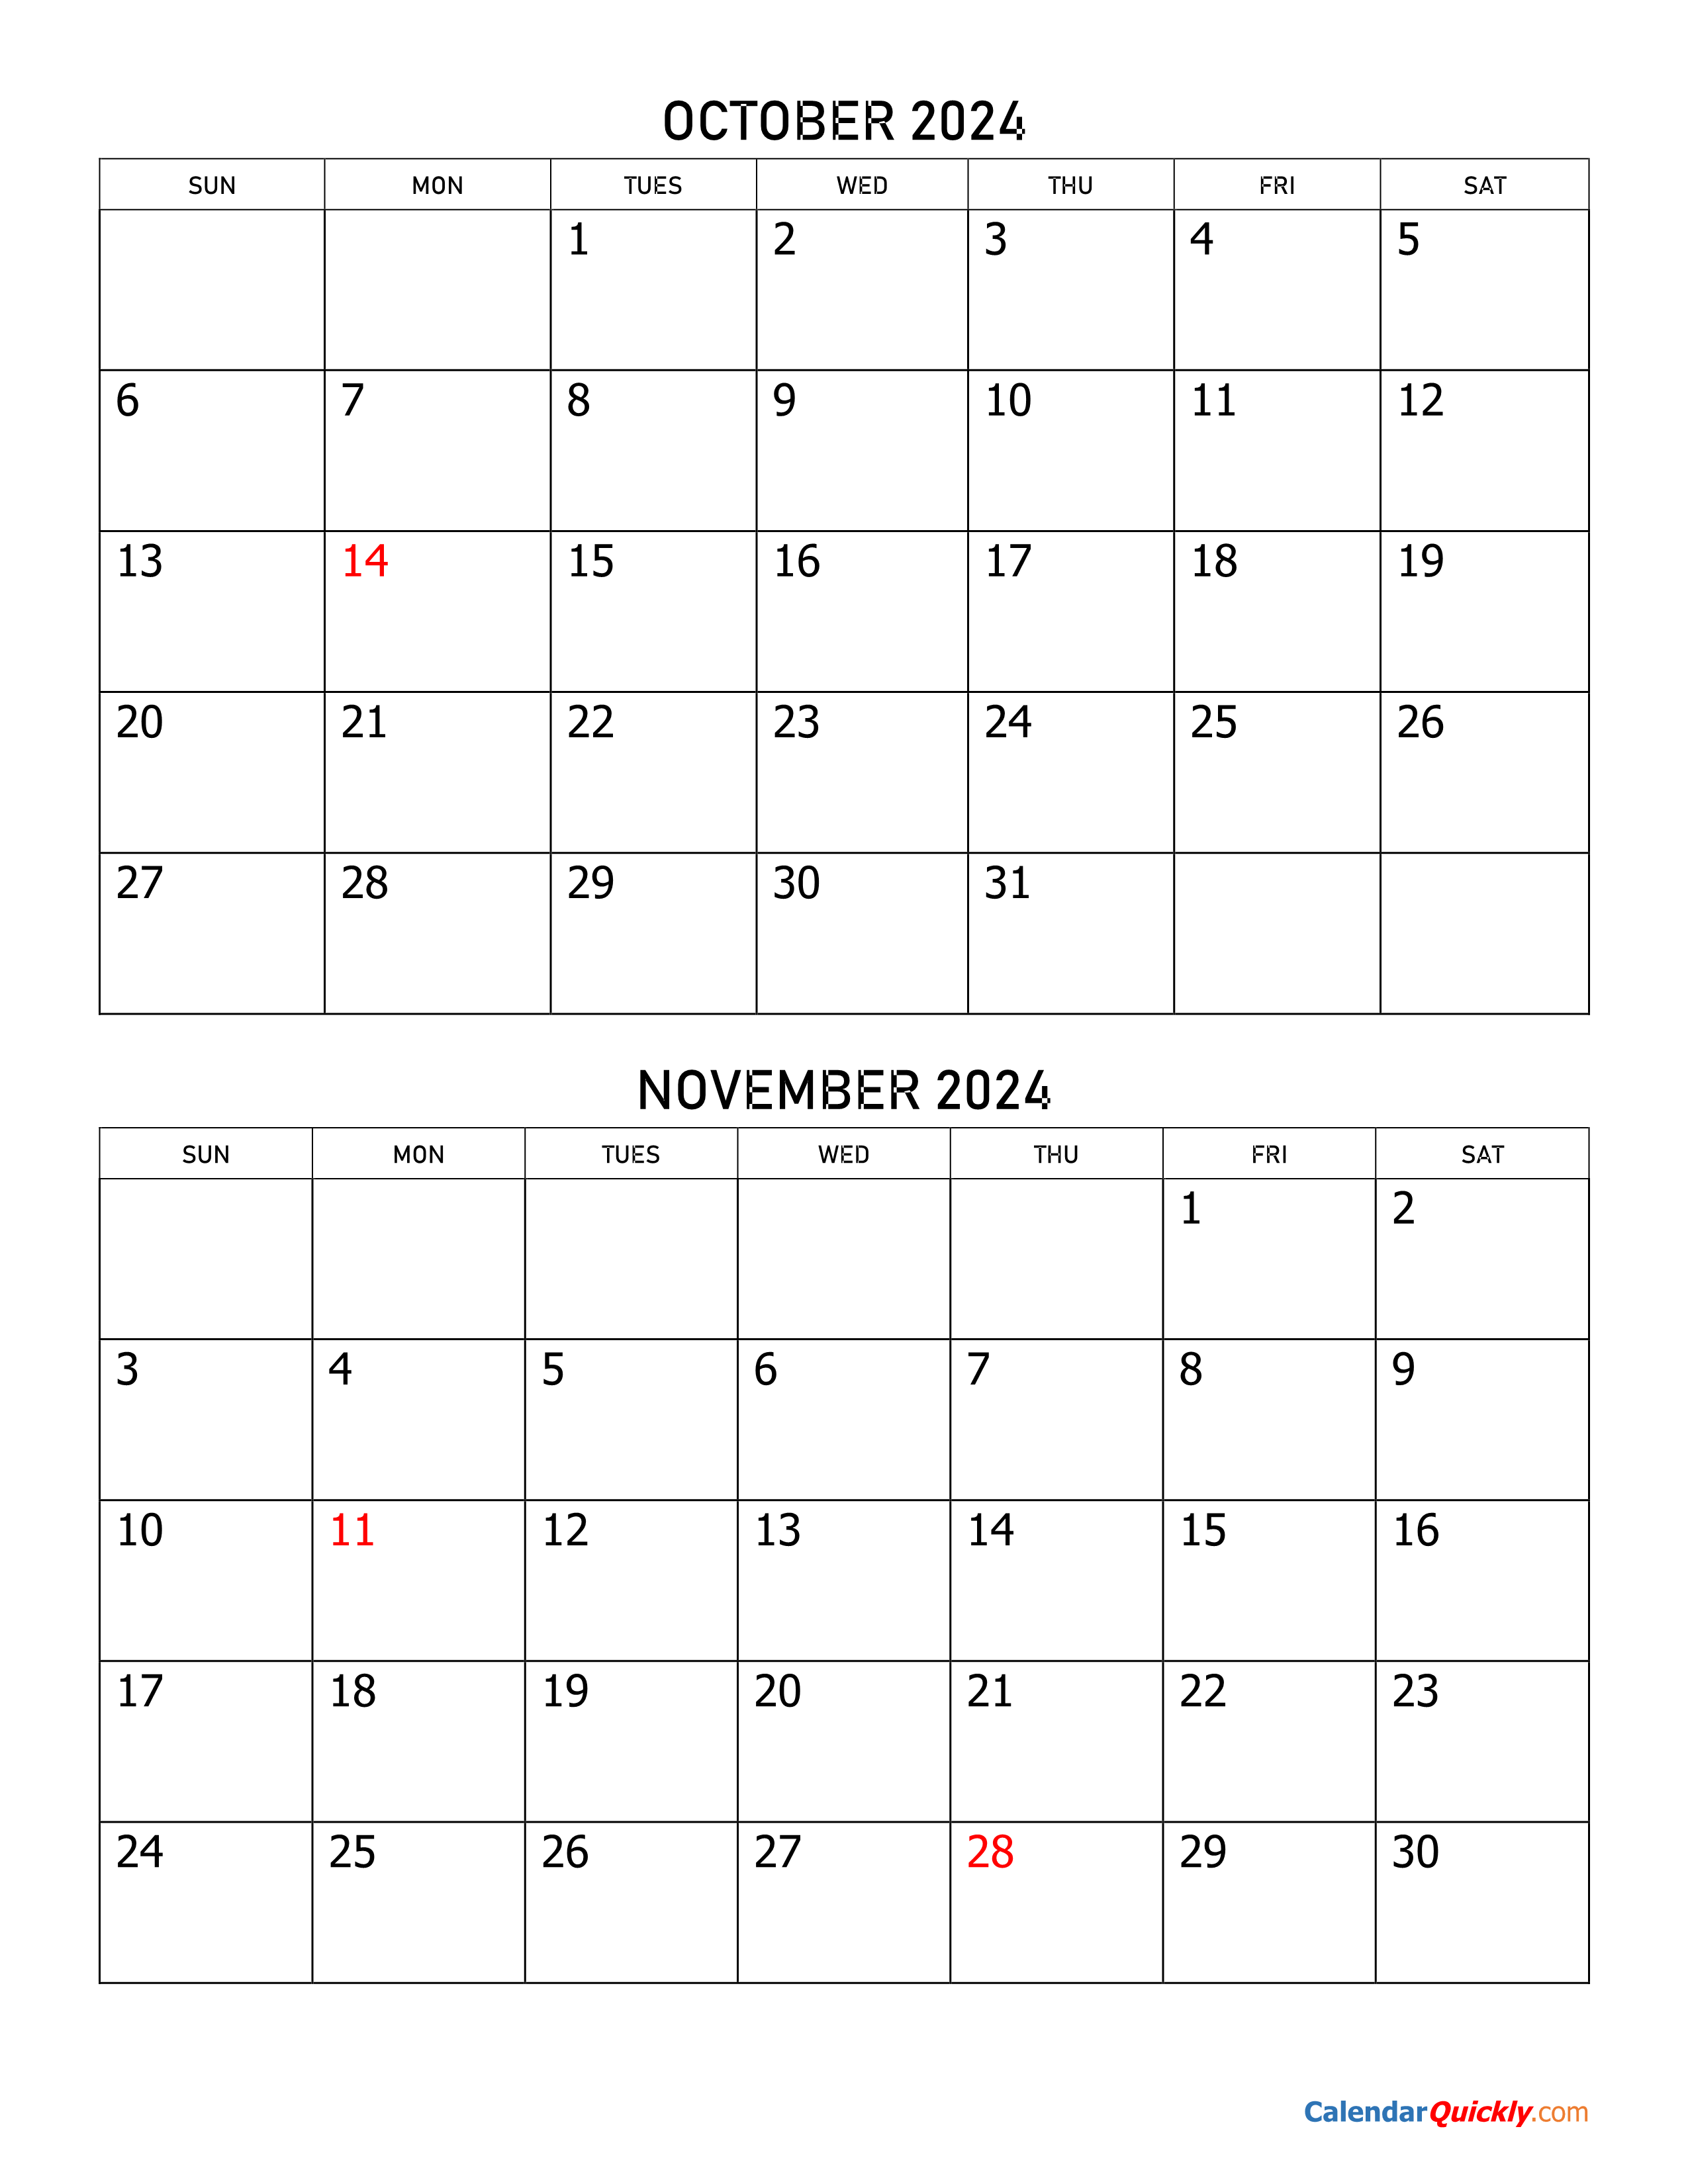 october-and-november-2024-calendar-calendar-quickly